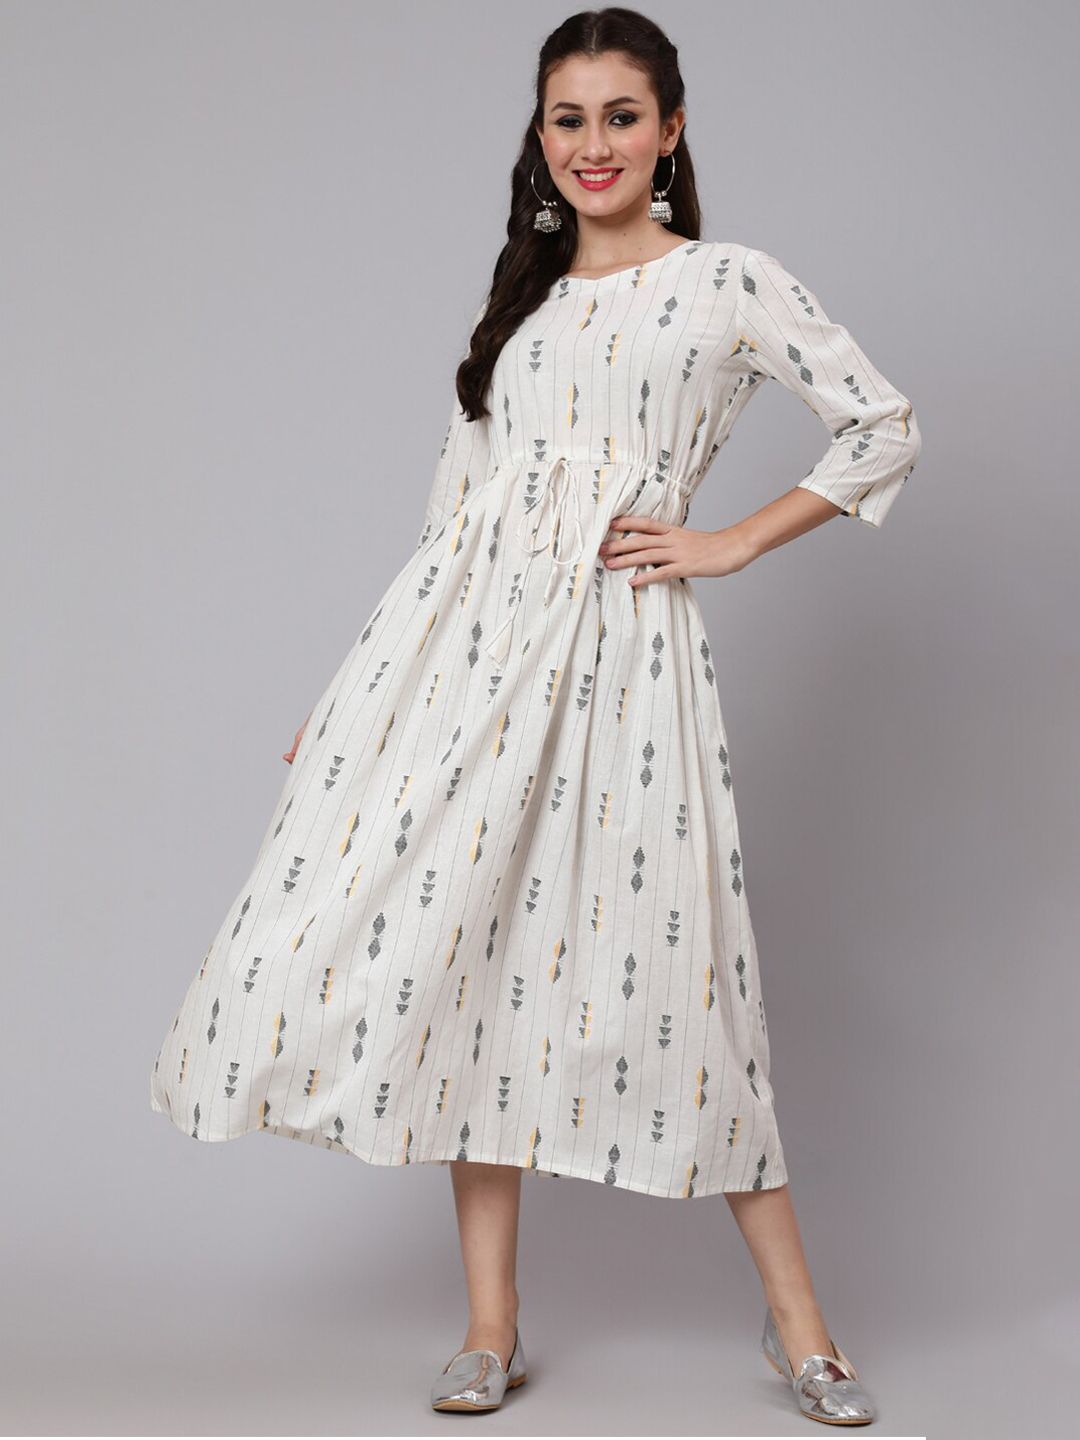 Nayo White Geometric Ethnic Printed A-Line Midi Dress Price in India